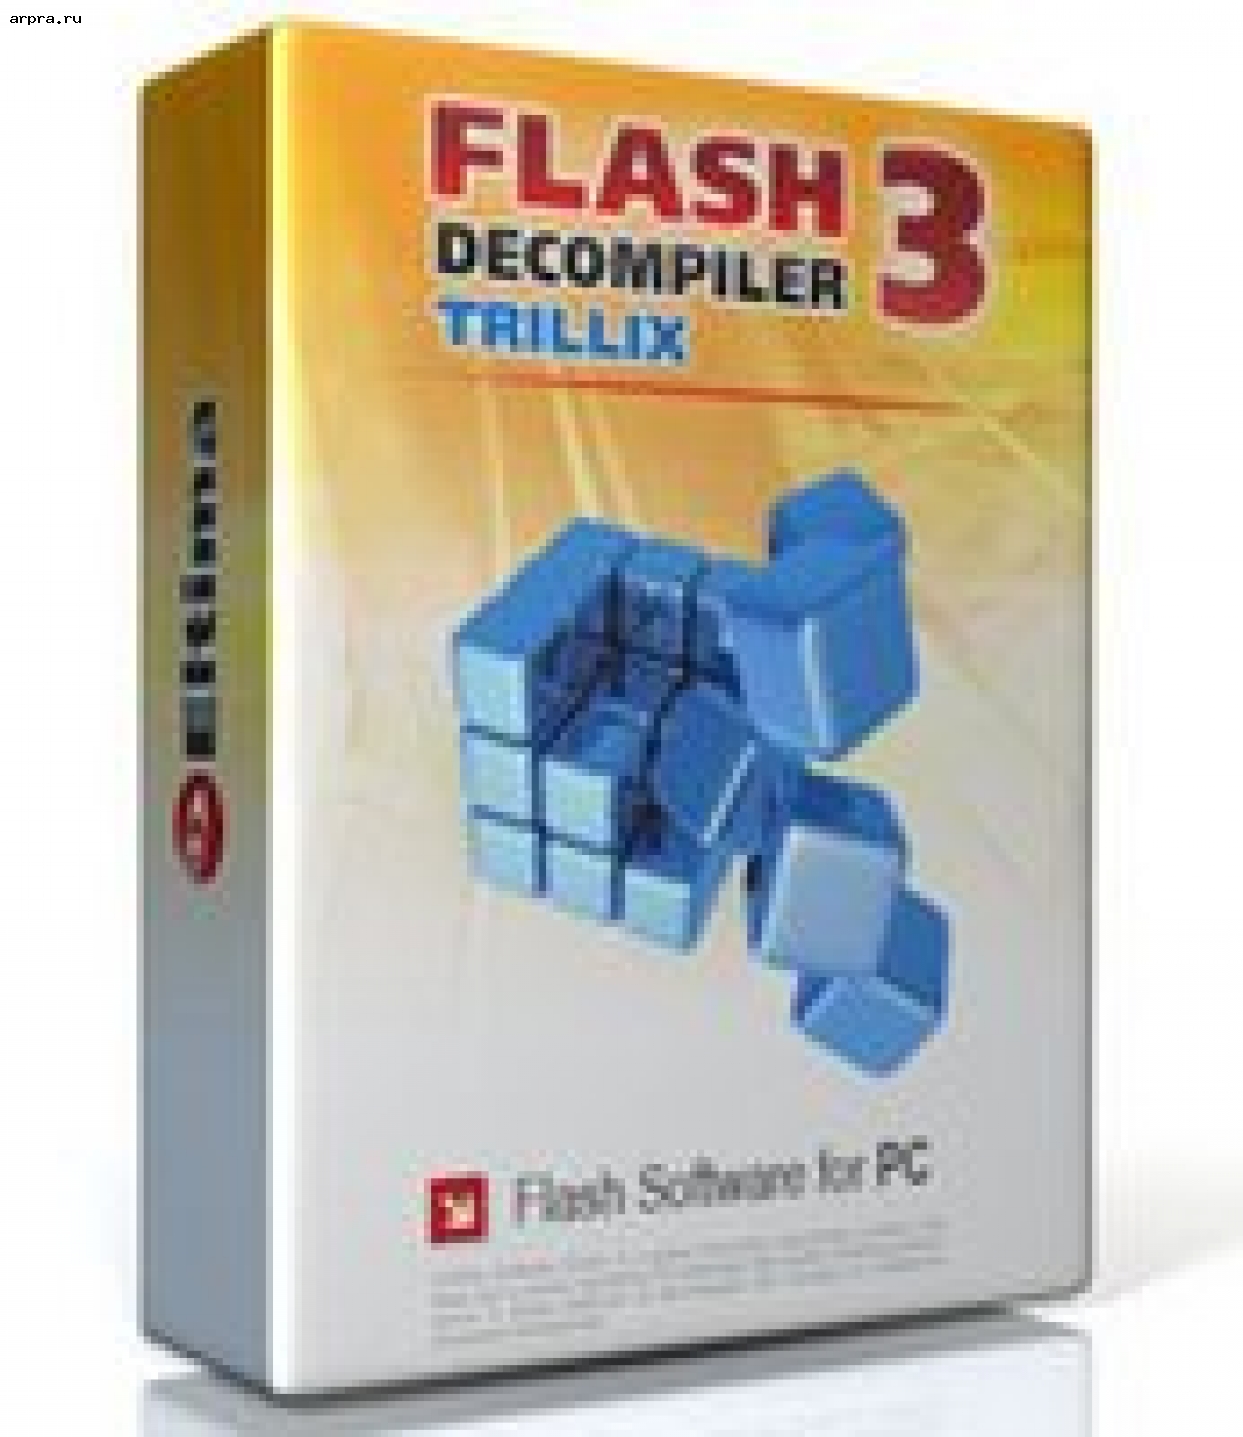 Flash Decompiler Trillix v 5.1.1140 Portable (русский)